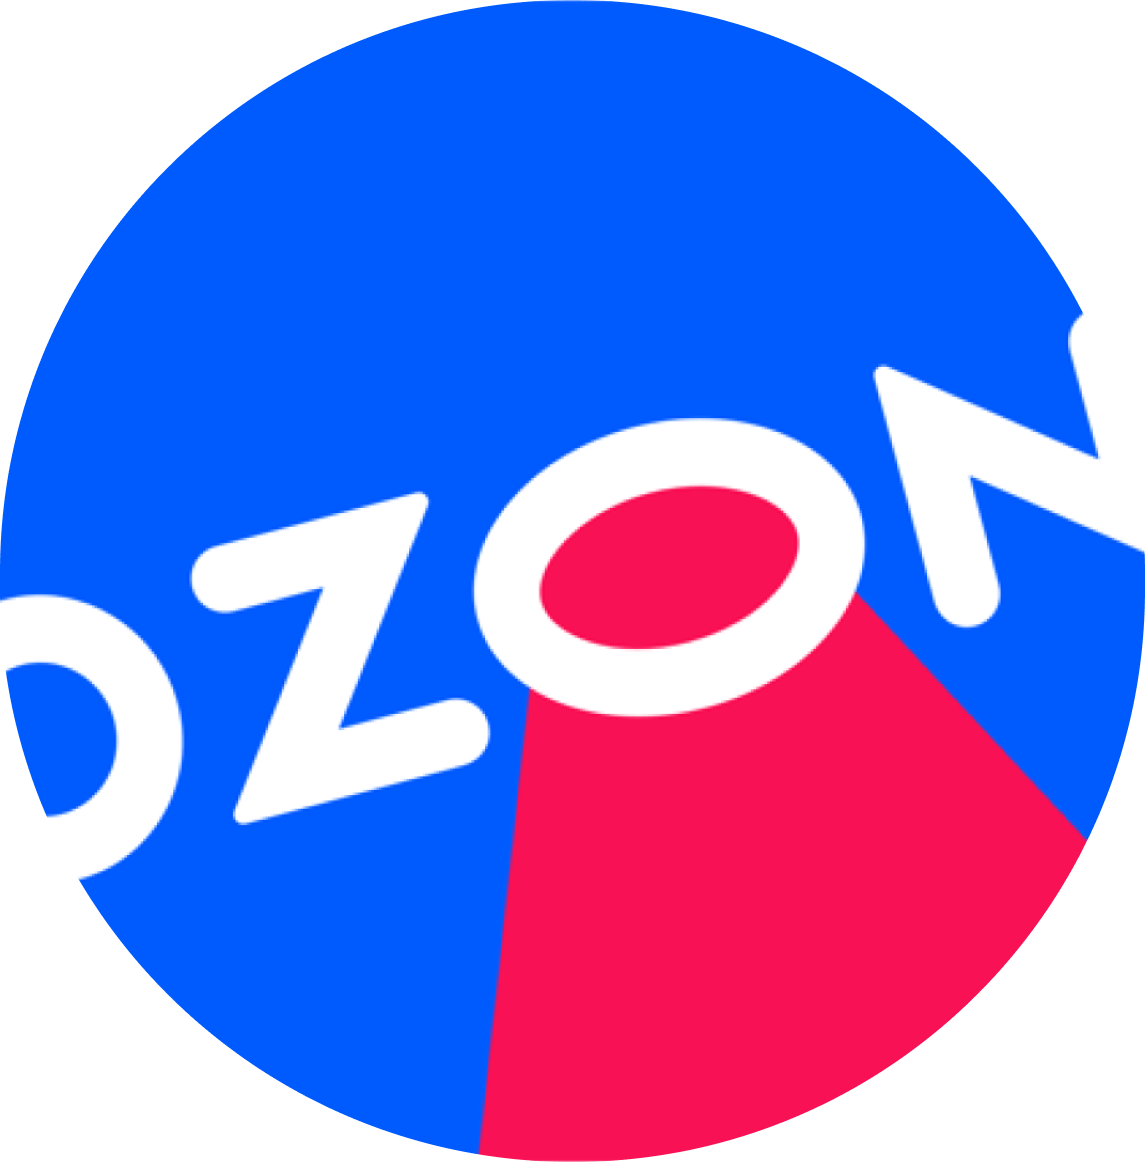 Логотип озон